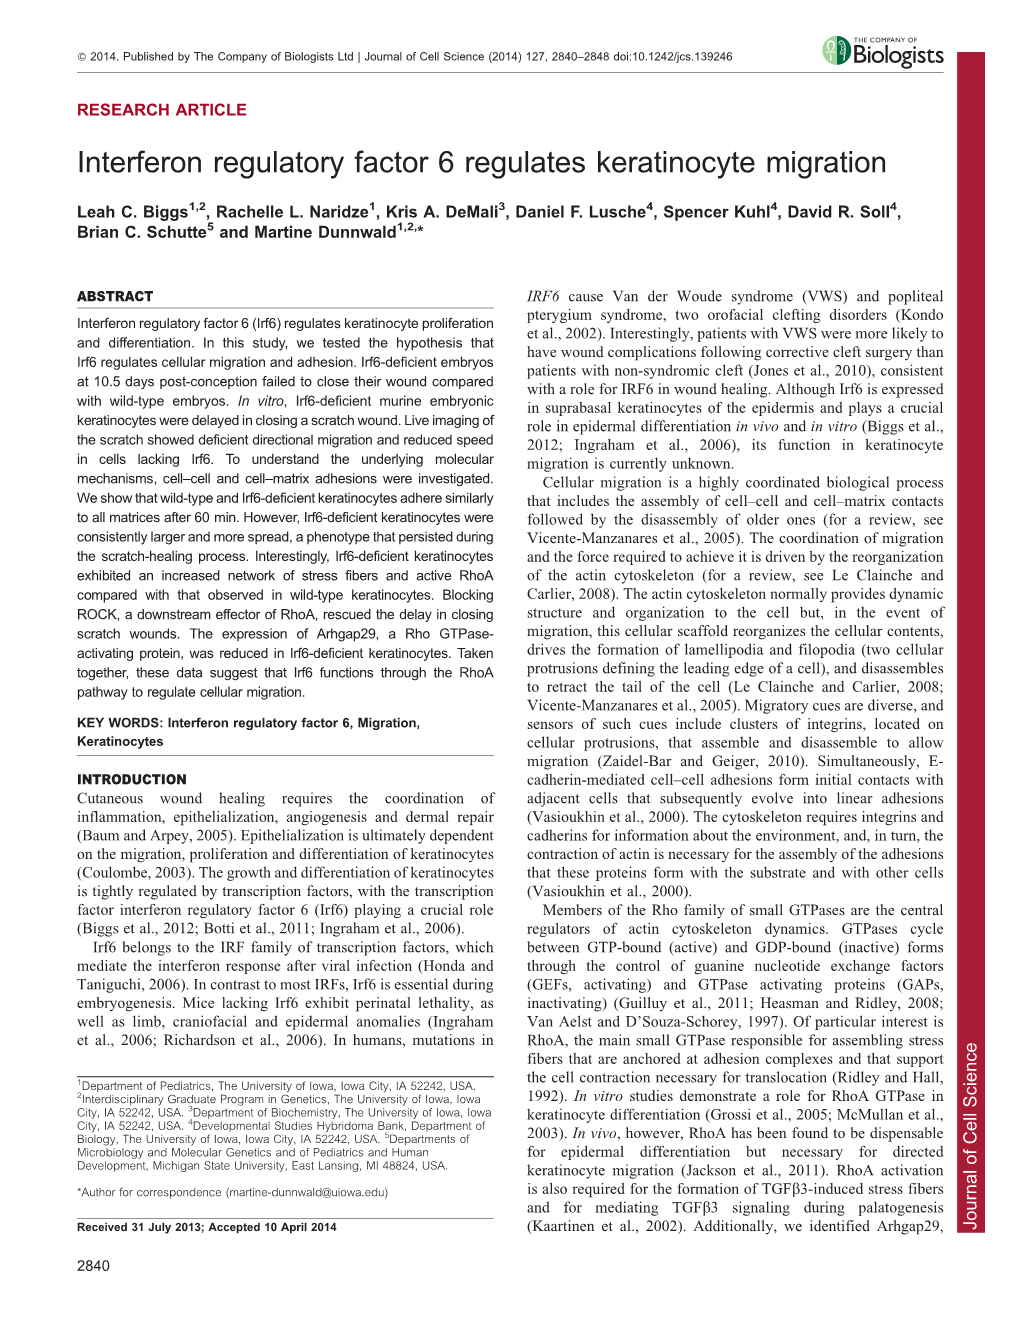 Interferon Regulatory Factor 6 Regulates Keratinocyte Migration